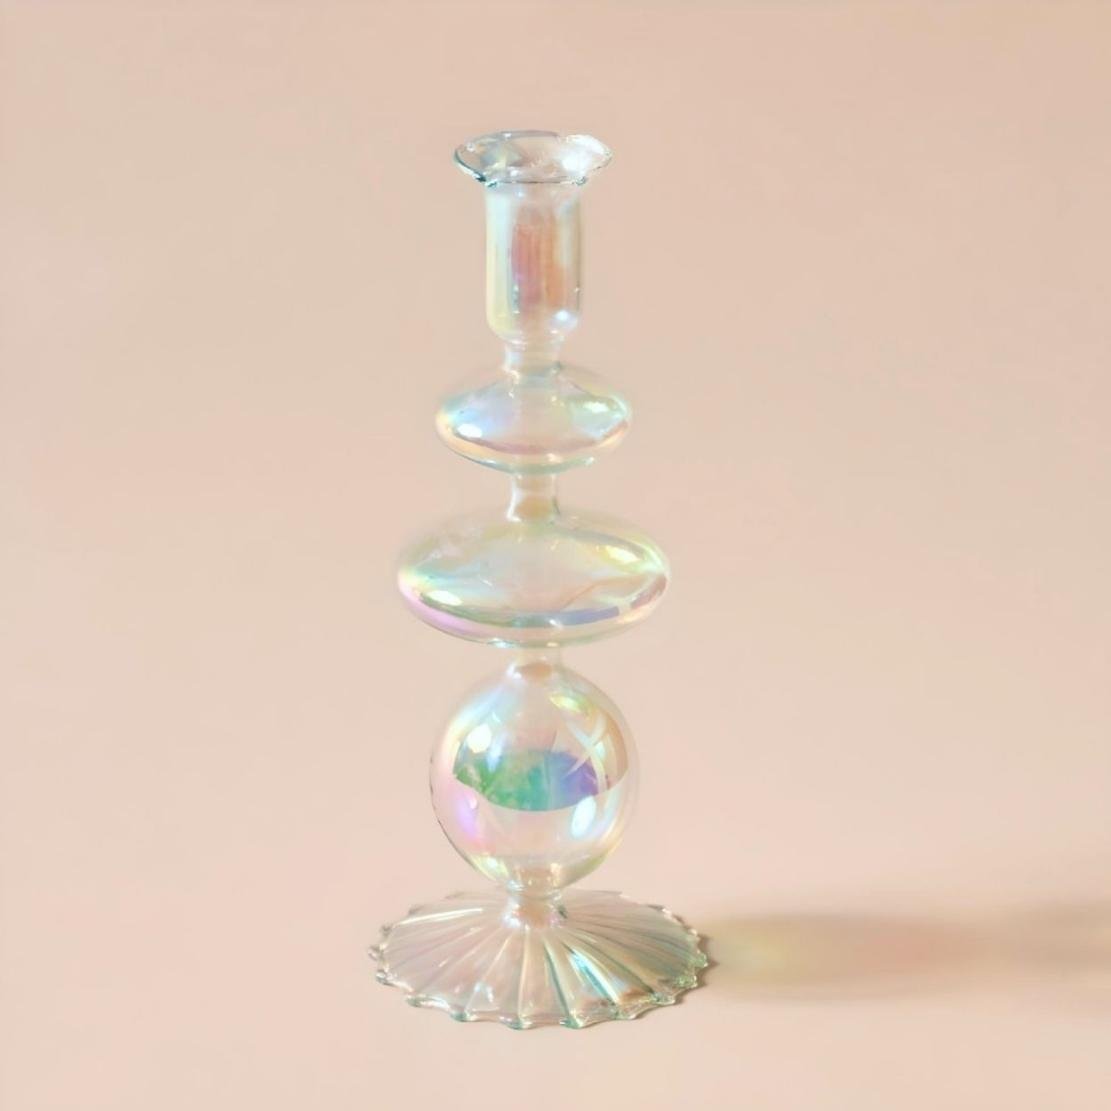 Layered saucer shiny glass candlestick holder